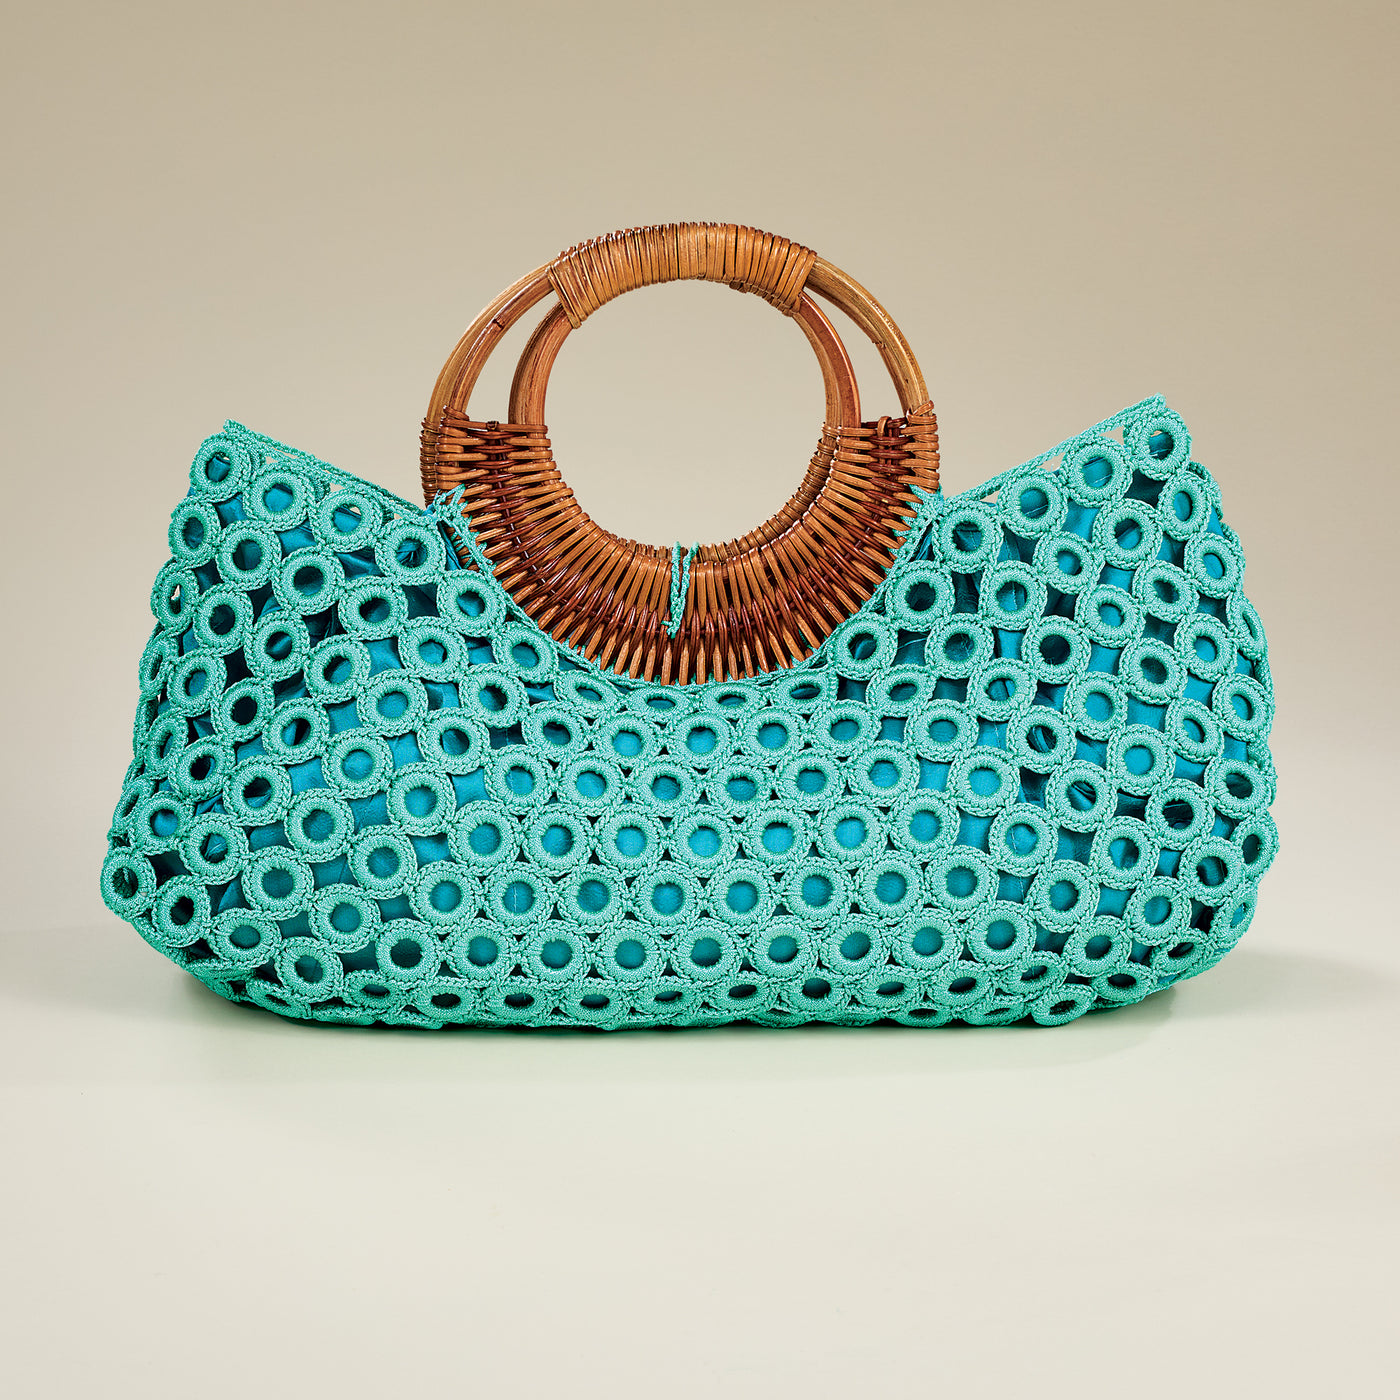 Aqua Crocheted Italian Handbag